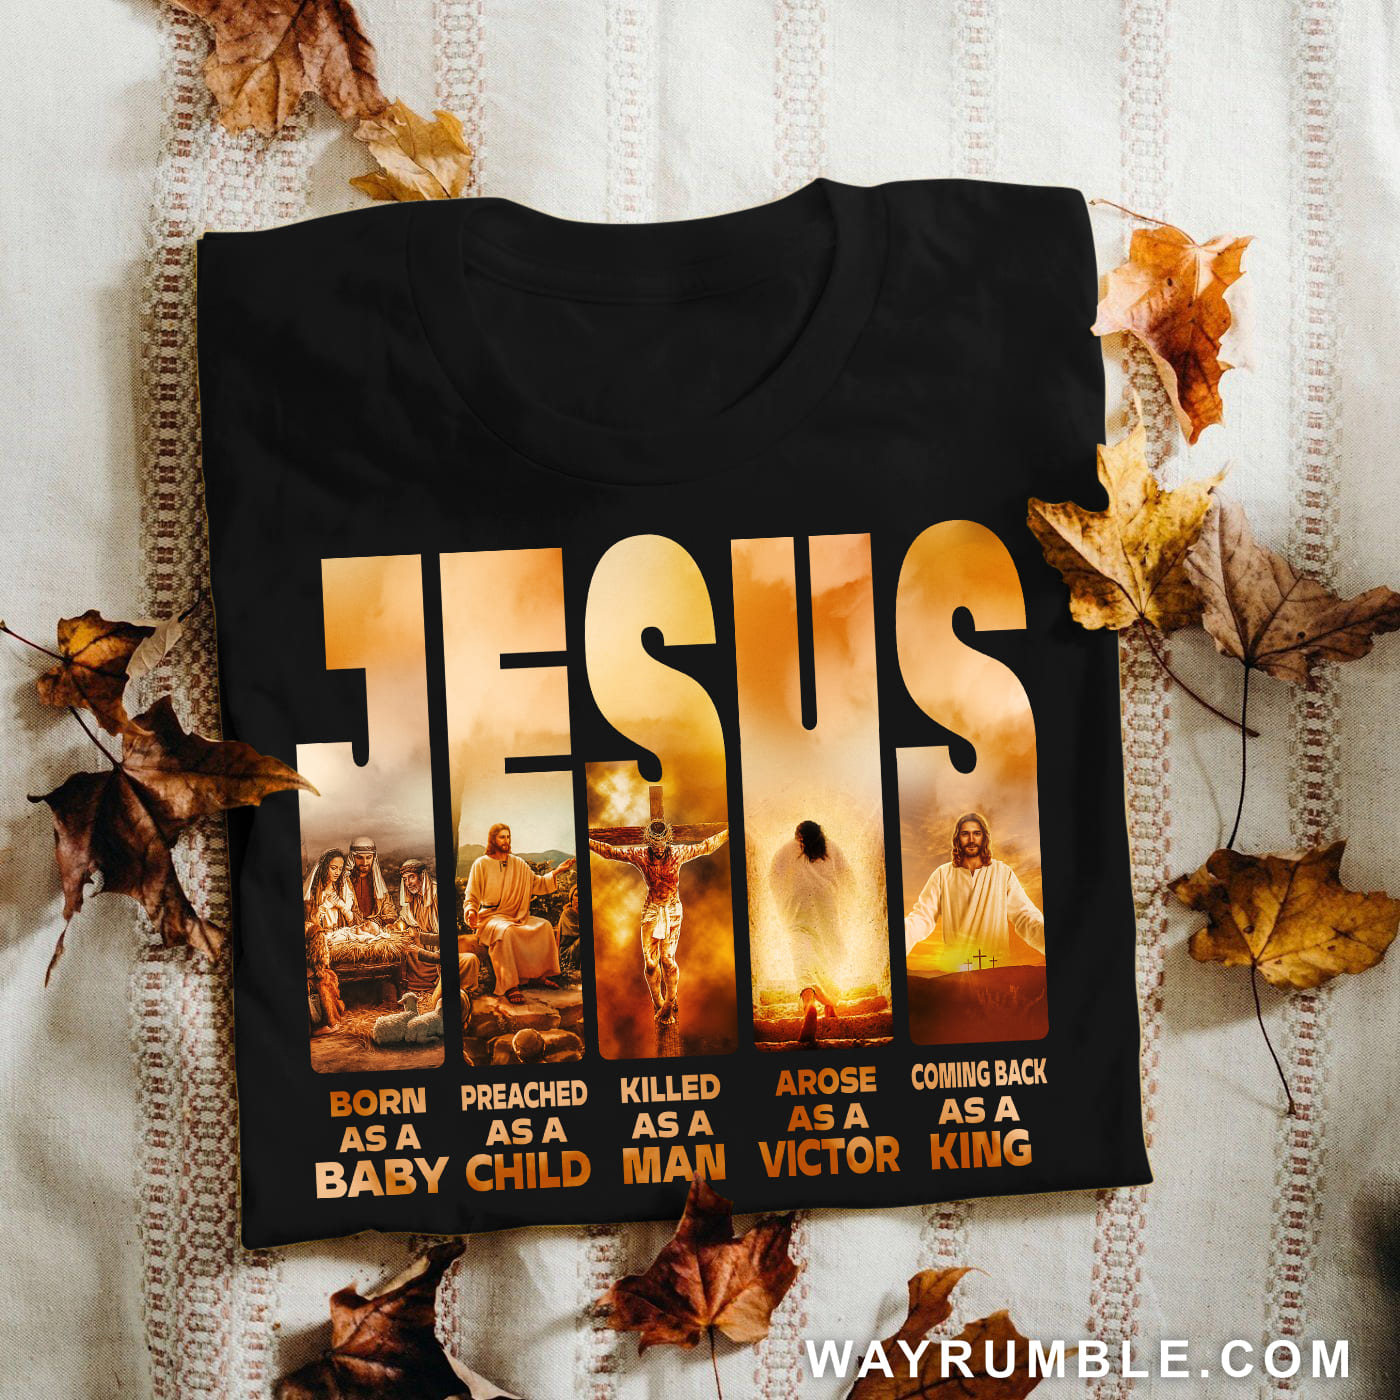 The life of Jesus, Jesus comes back as a King – Jesus TeeShirt